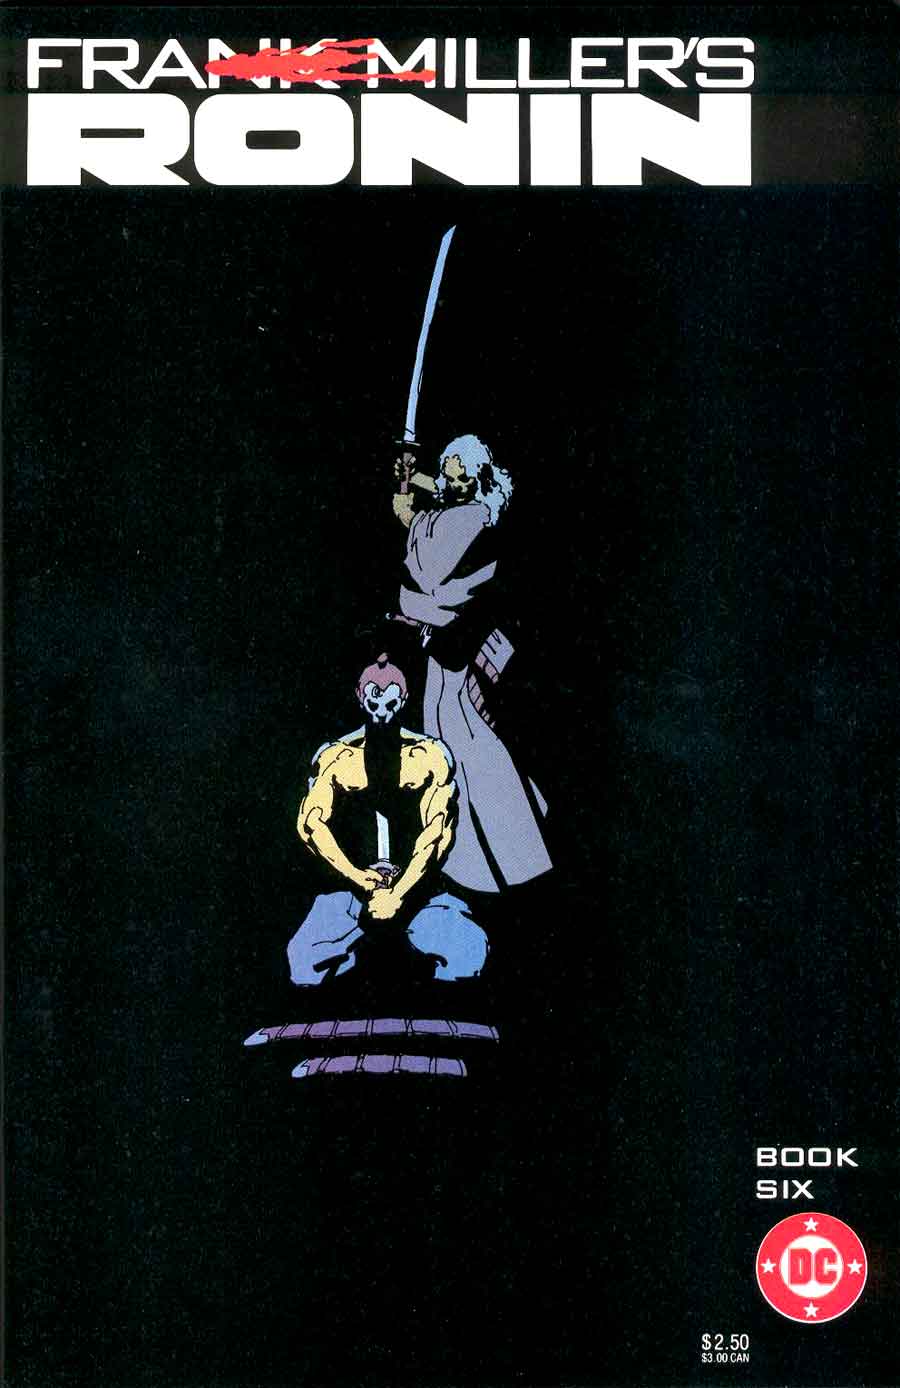 Ronin v1 #6 dc comic book cover art by Frank Miller